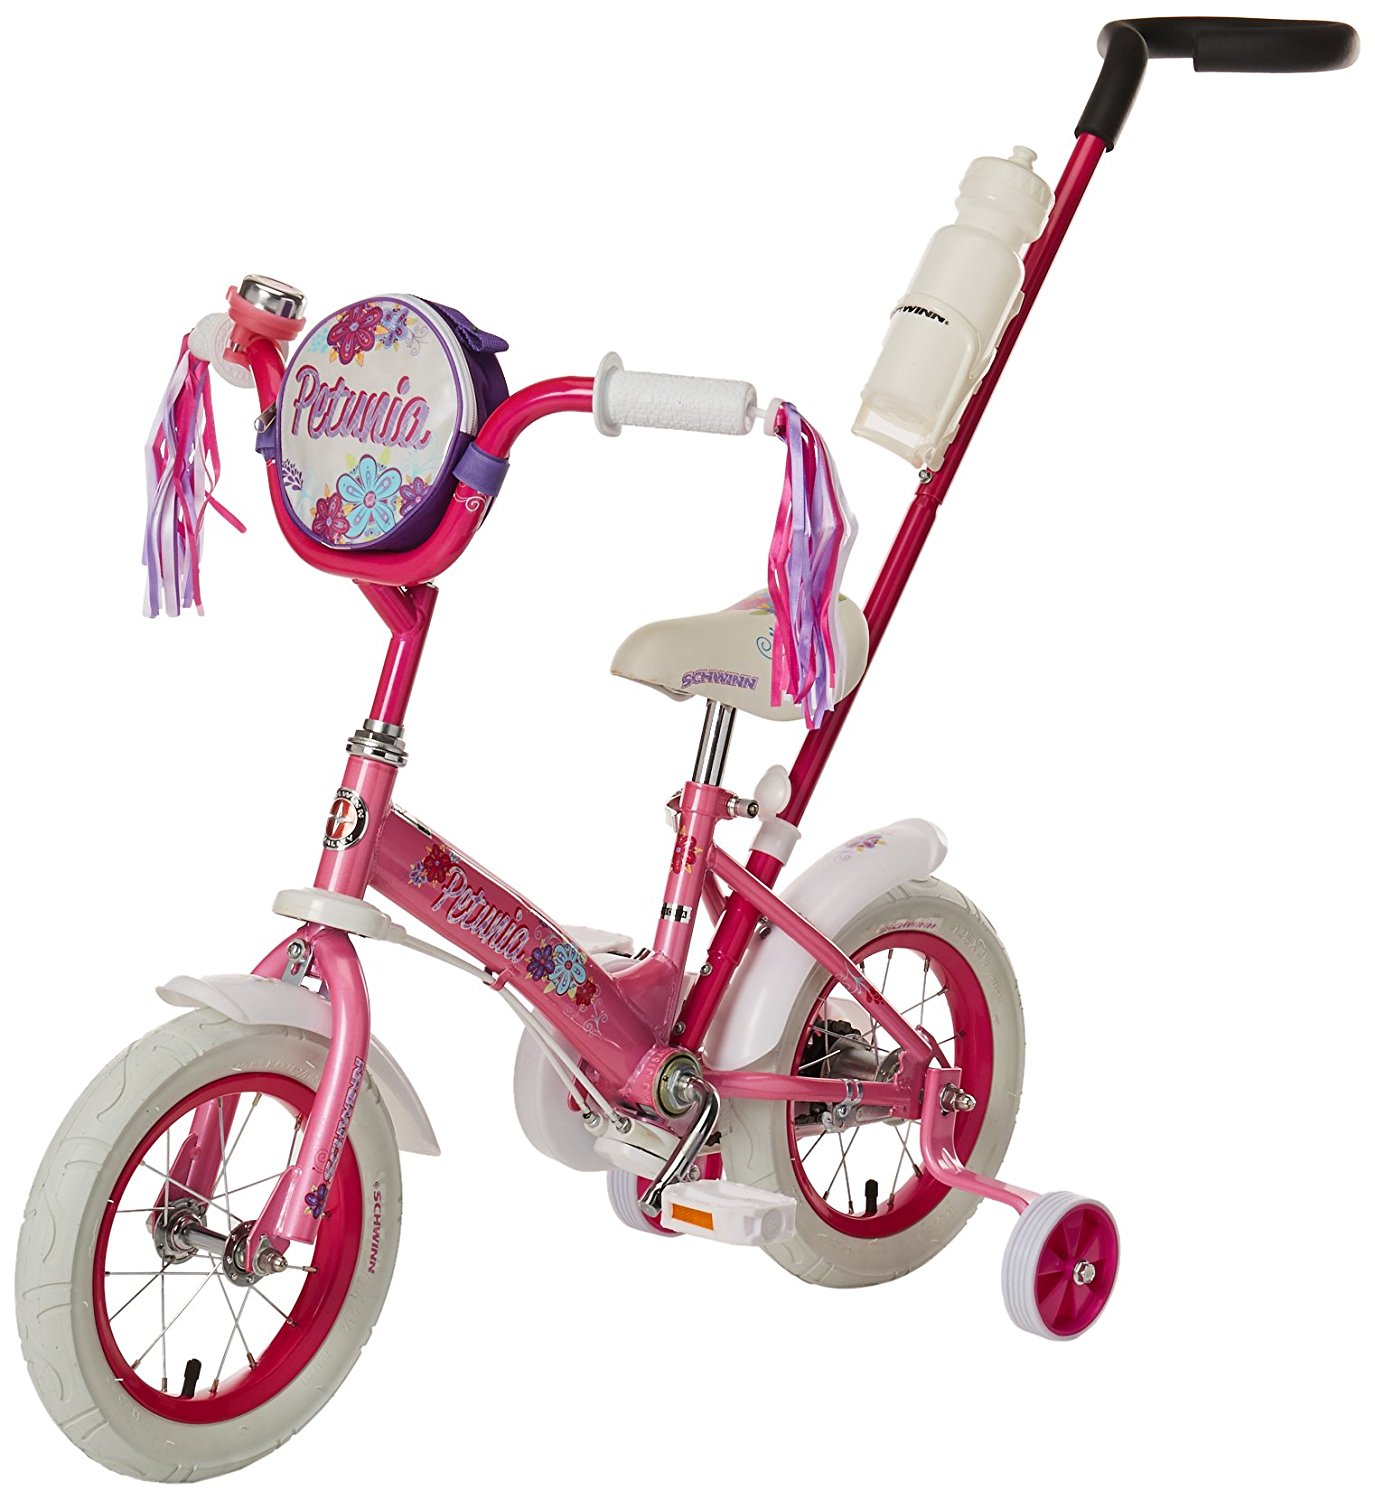 Schwinn Girls' Petunia 12-inch Steerable Bike,Pink/White